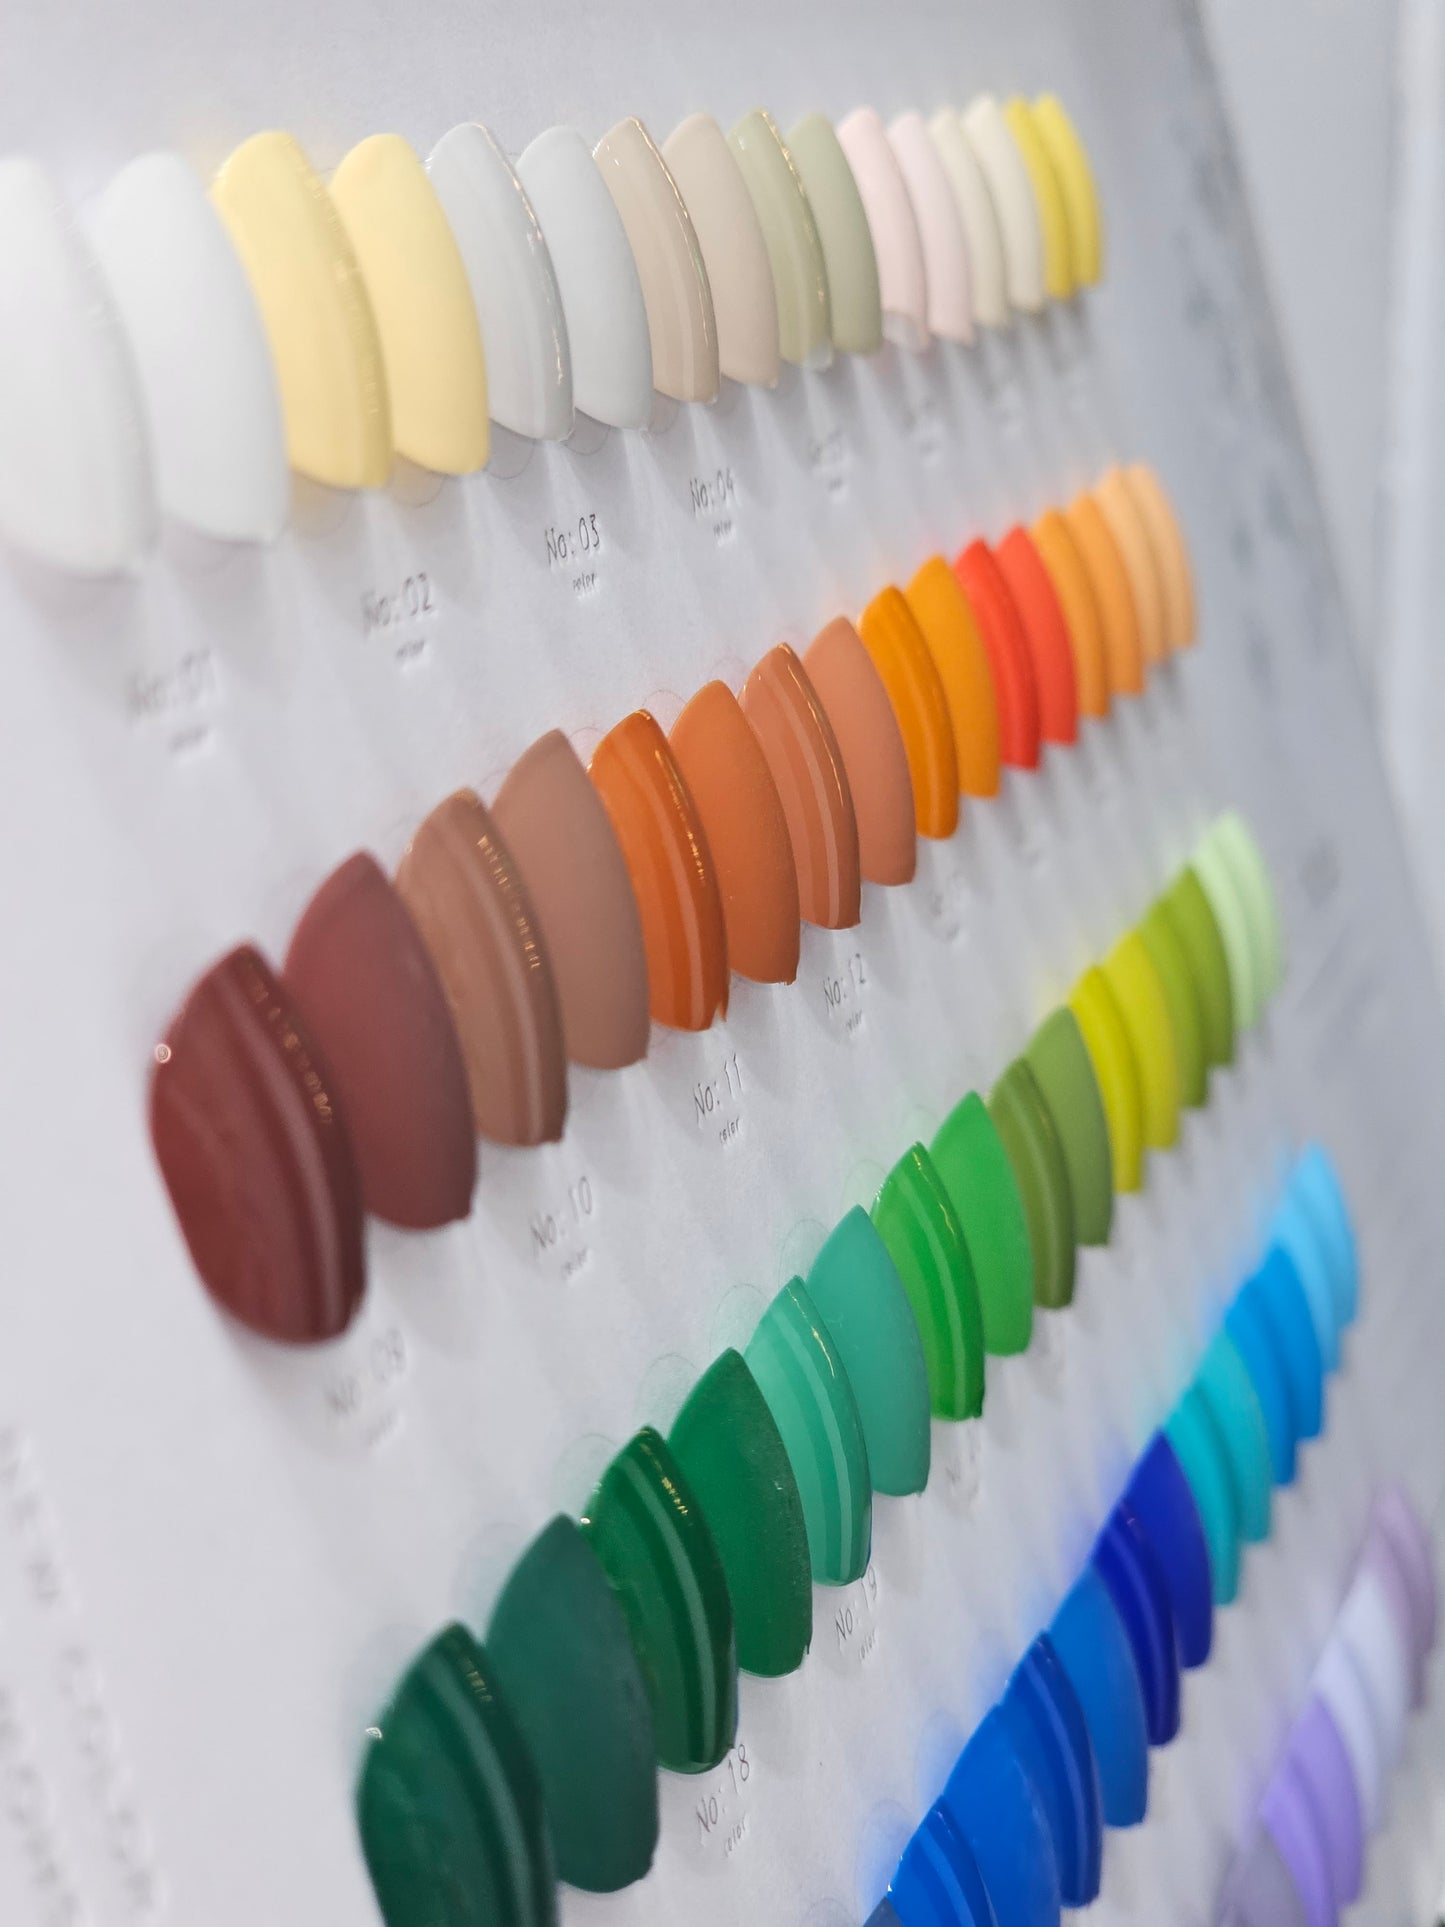 48 Colors - 15ml - Korean Gel Nail Polish Set with Color Palette Display